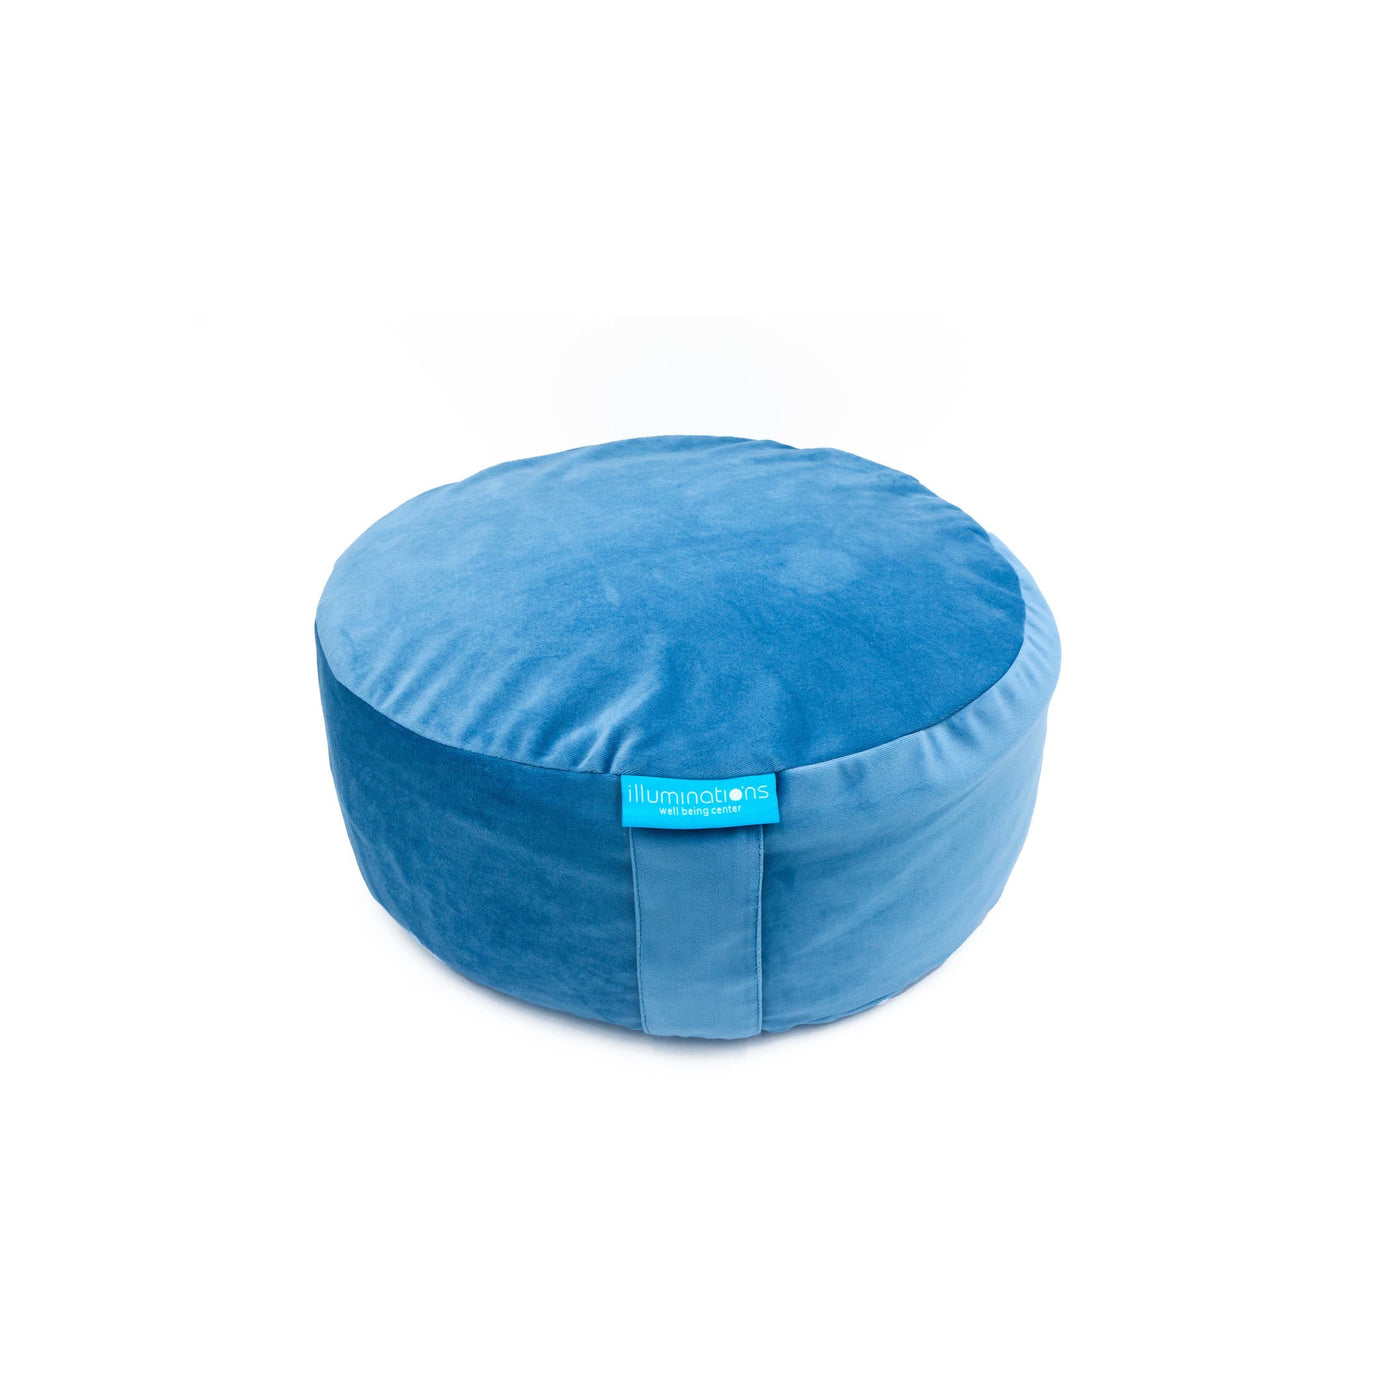 Meditation Cushion filled w/ Buckwheat Hulls- Light Blue